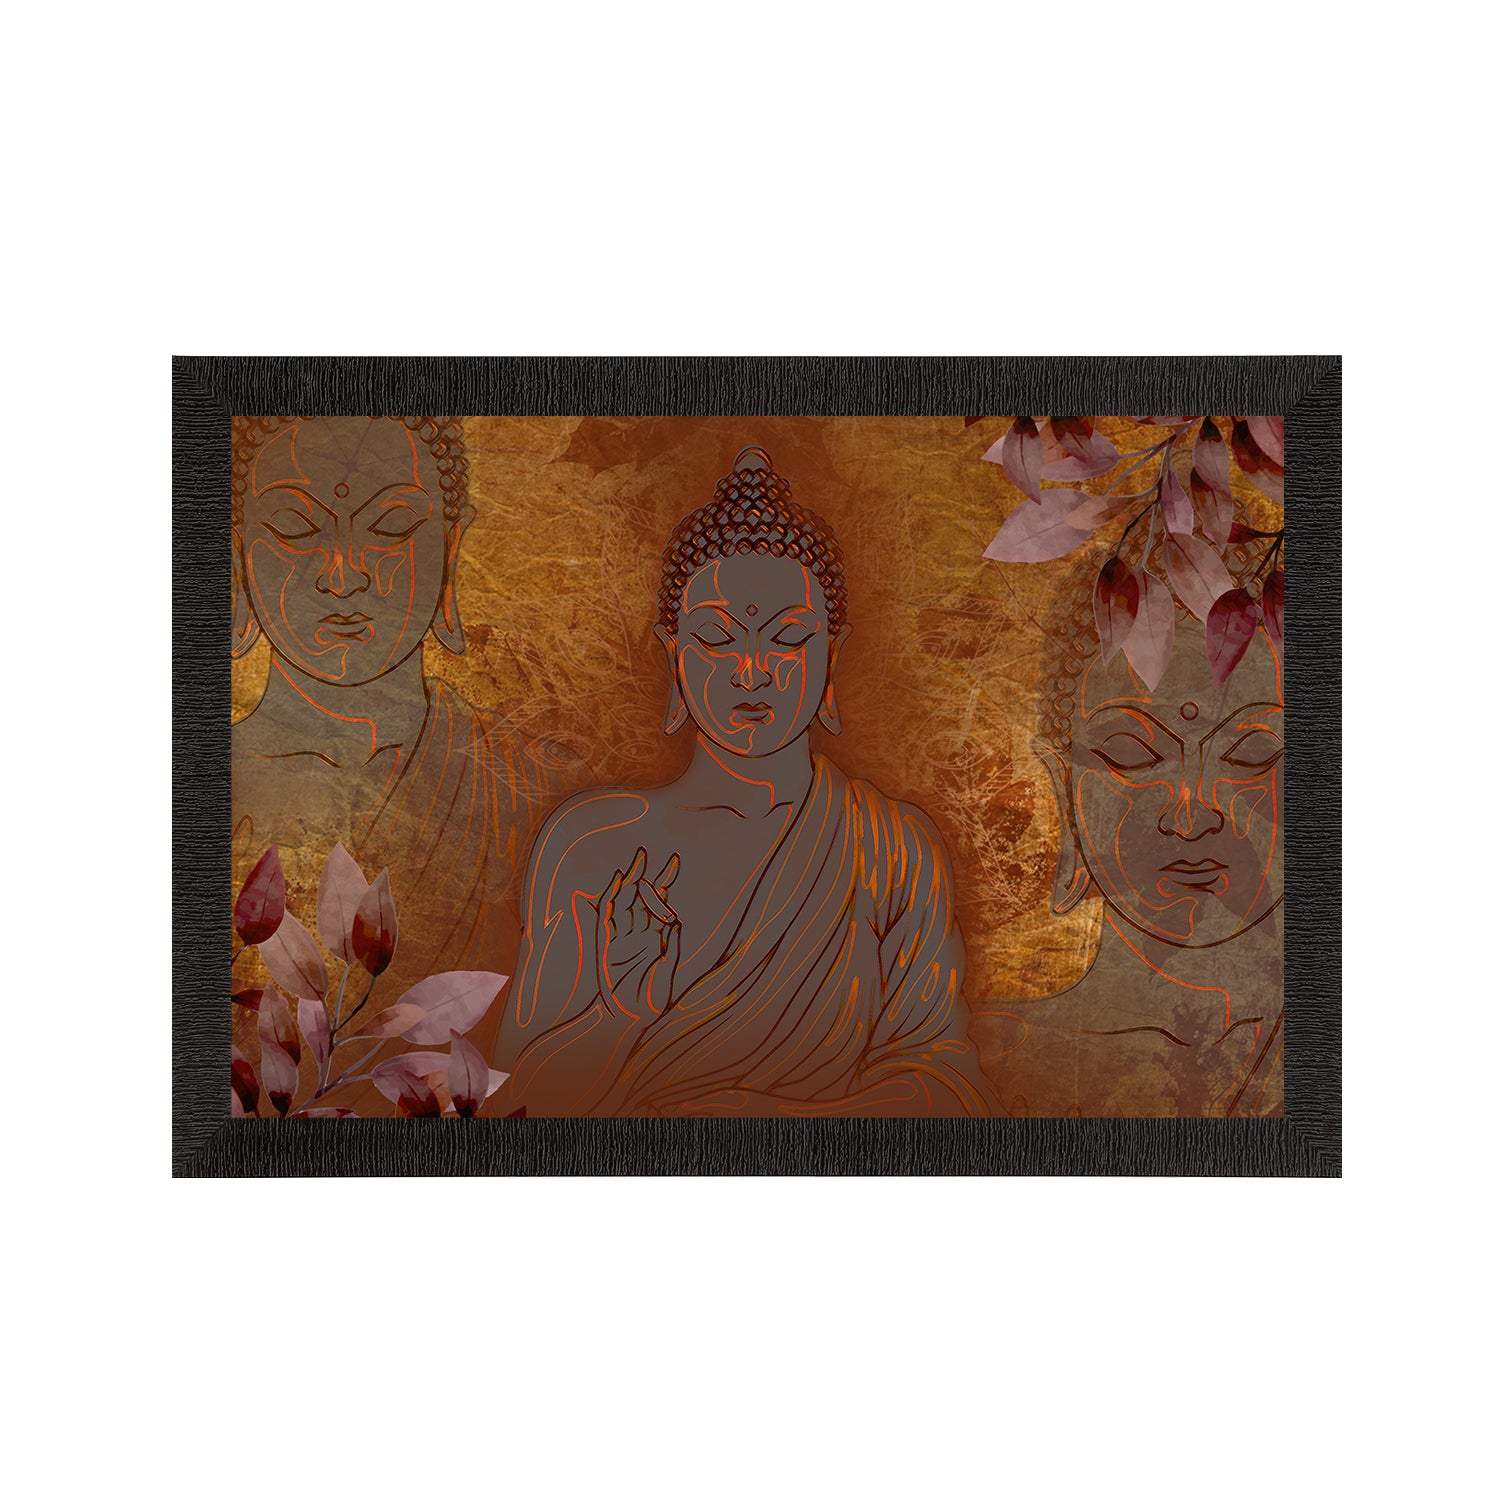 Meditating Lord Buddha Satin Matt Texture UV Art Painting